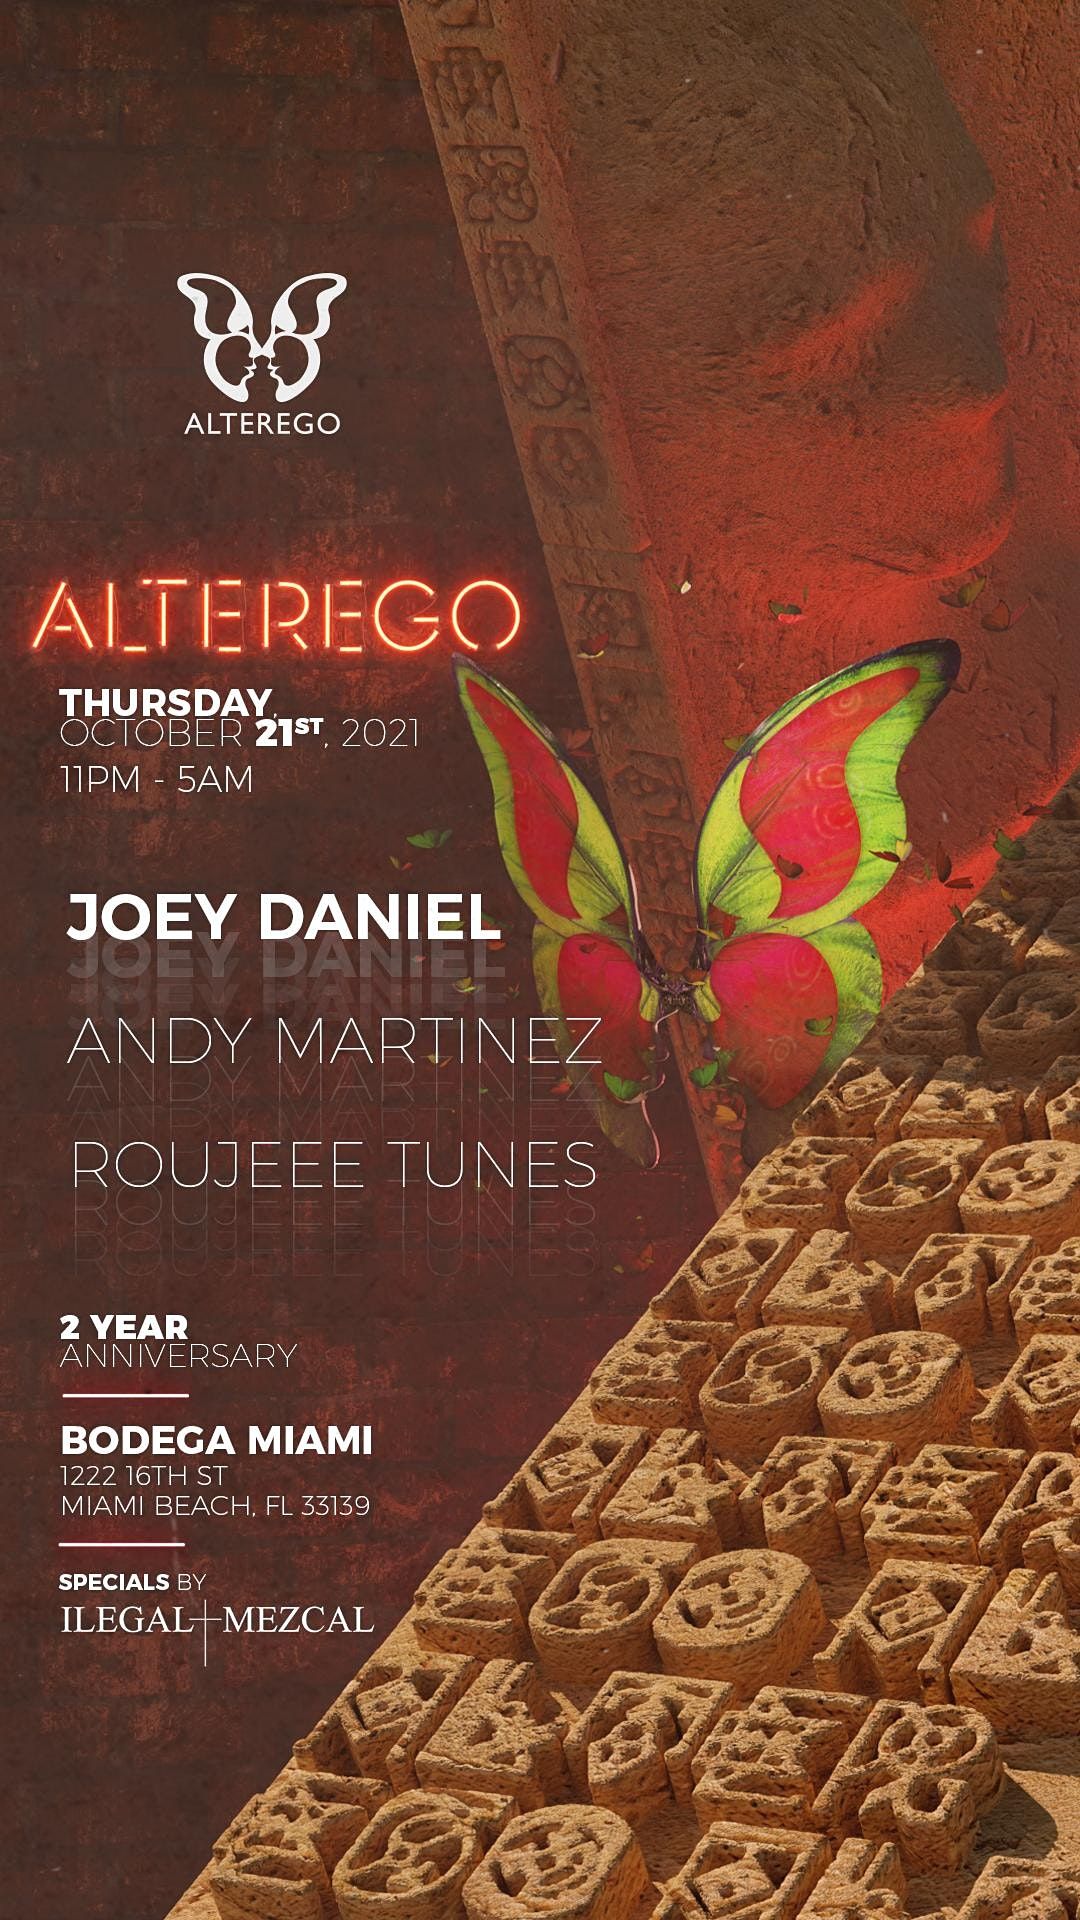 Joey Daniel: 2 Years of Alterego